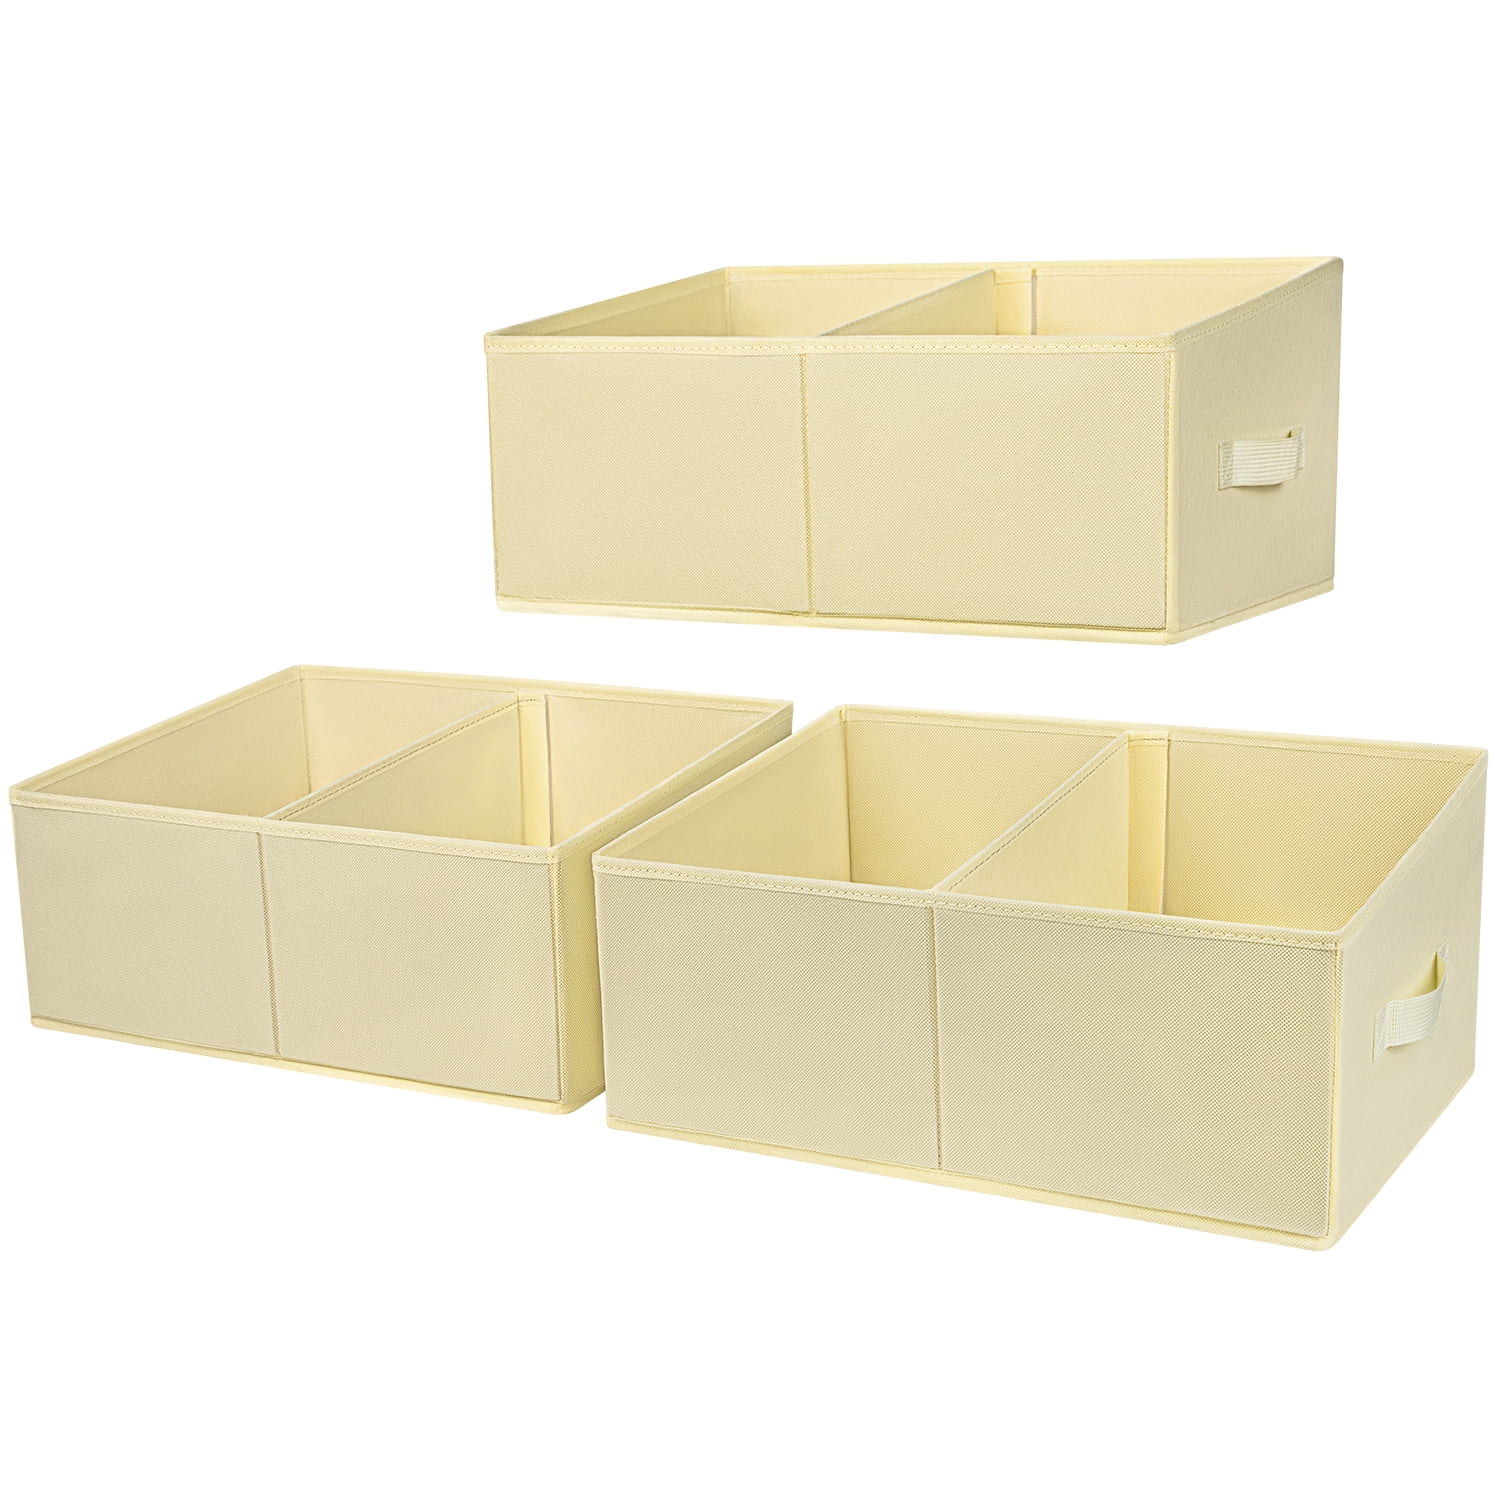 DIMJ Storage Bins, 6 Pcs Trapezoid Closet Storage Baskets for Shelves  Fabric Storage Box, Open Storage Cubes for Clothes Jeans Books Toys Office  Bathroom Home Organization, Stripe 